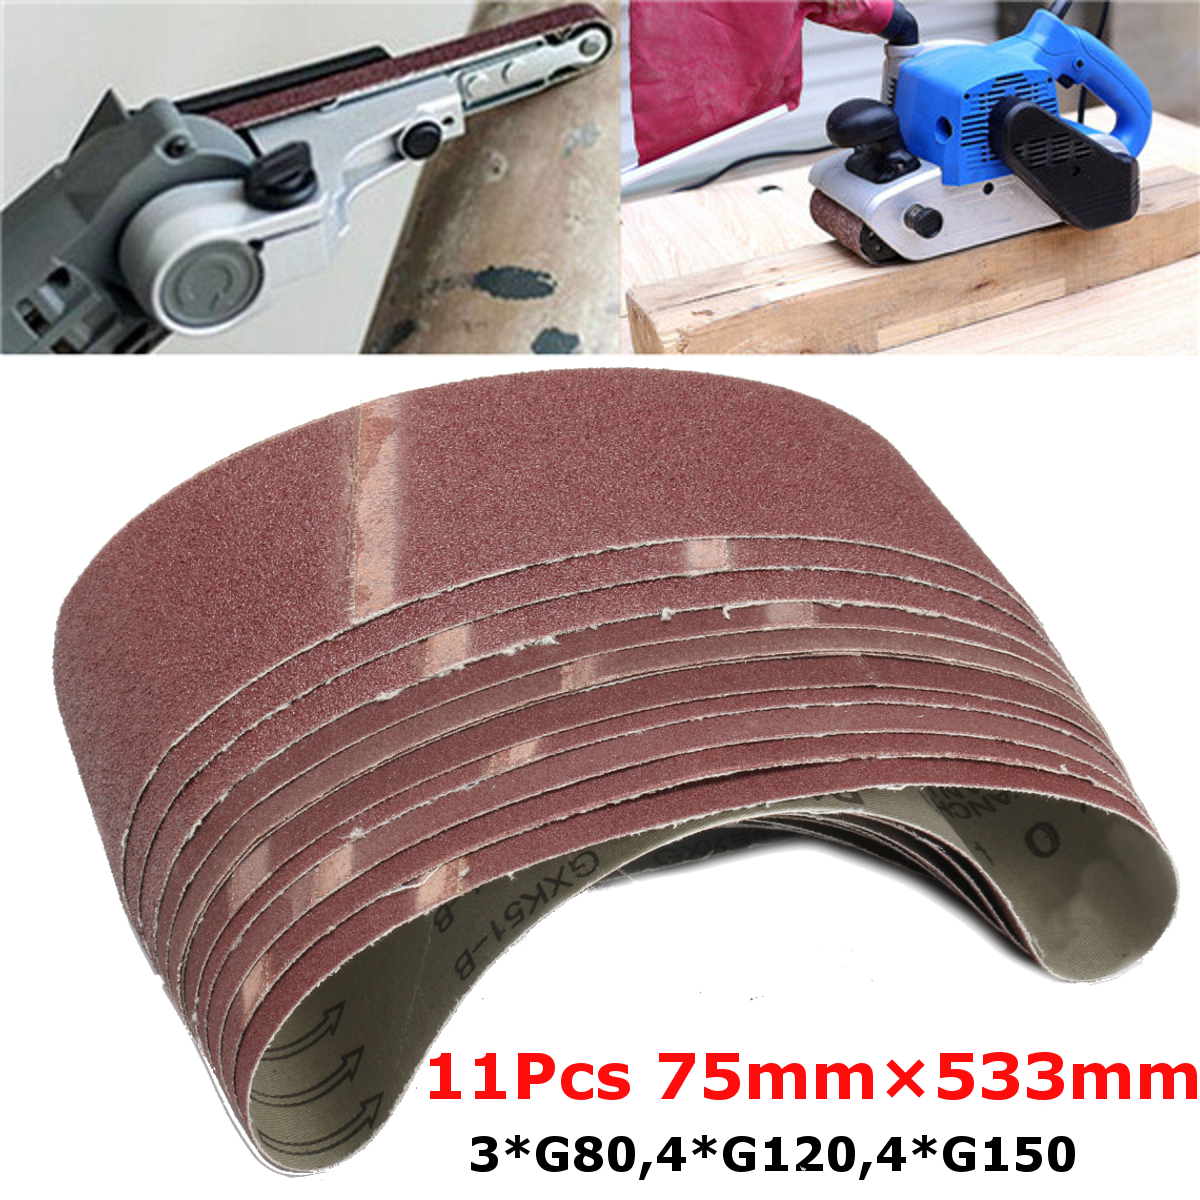 11Pcs Sanding Belts 75mm x 533mm 80 120 150 Mixed Grit Alumina Sander File Belt Set Abrasive Tools Accessories